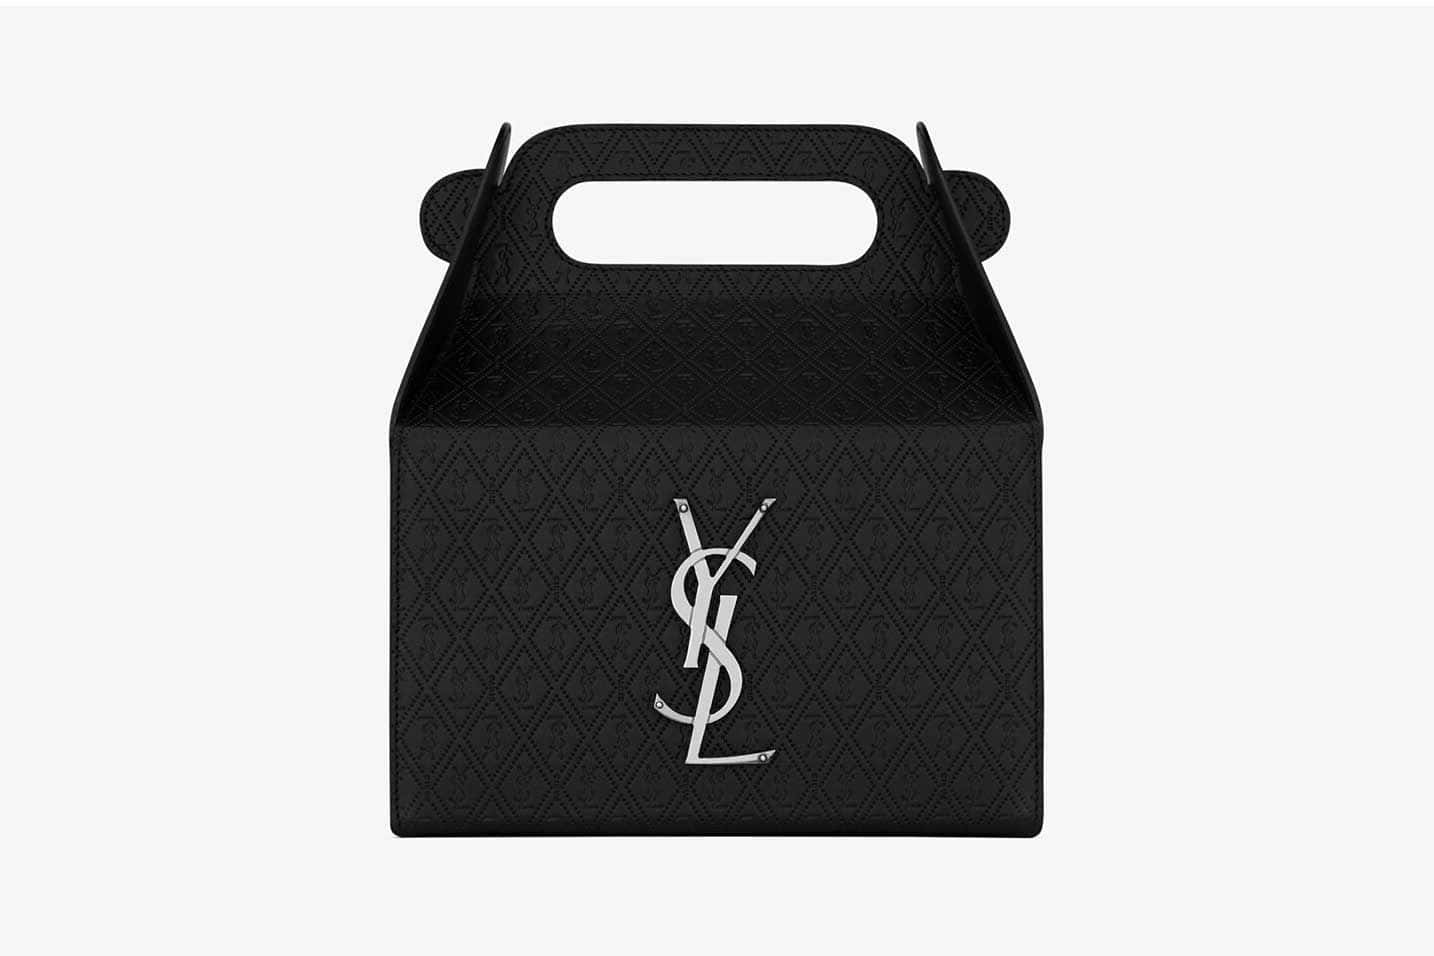 Yves Saint Laurent - Elevating the World of Luxury